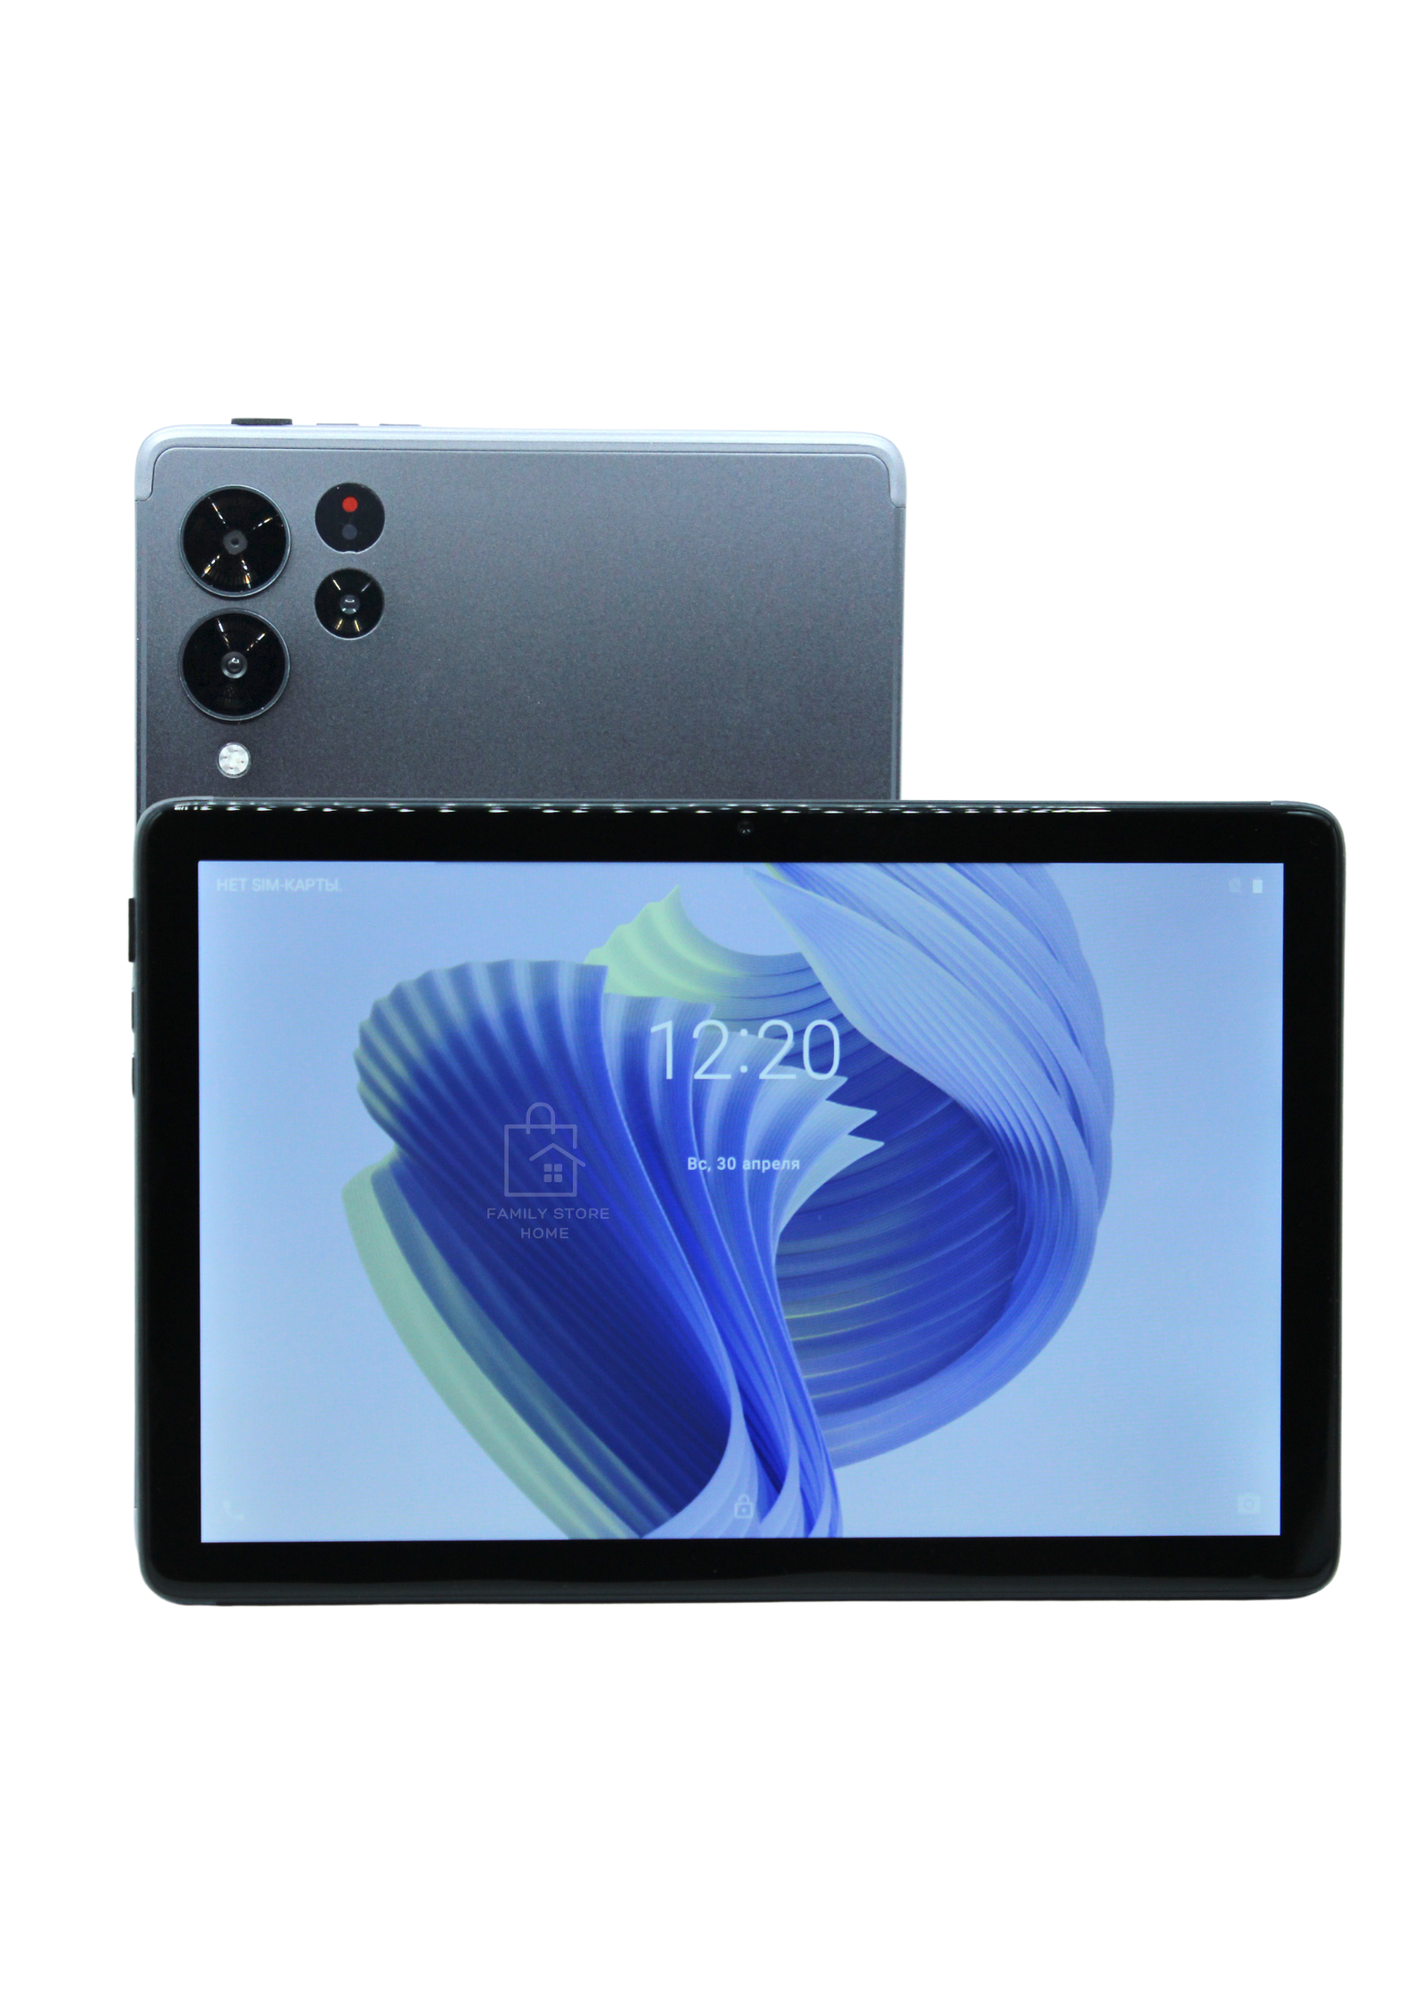 Планшет Umiio P80 Pad голубой / Планшет для работы / Планшет для игр / Family Store Home